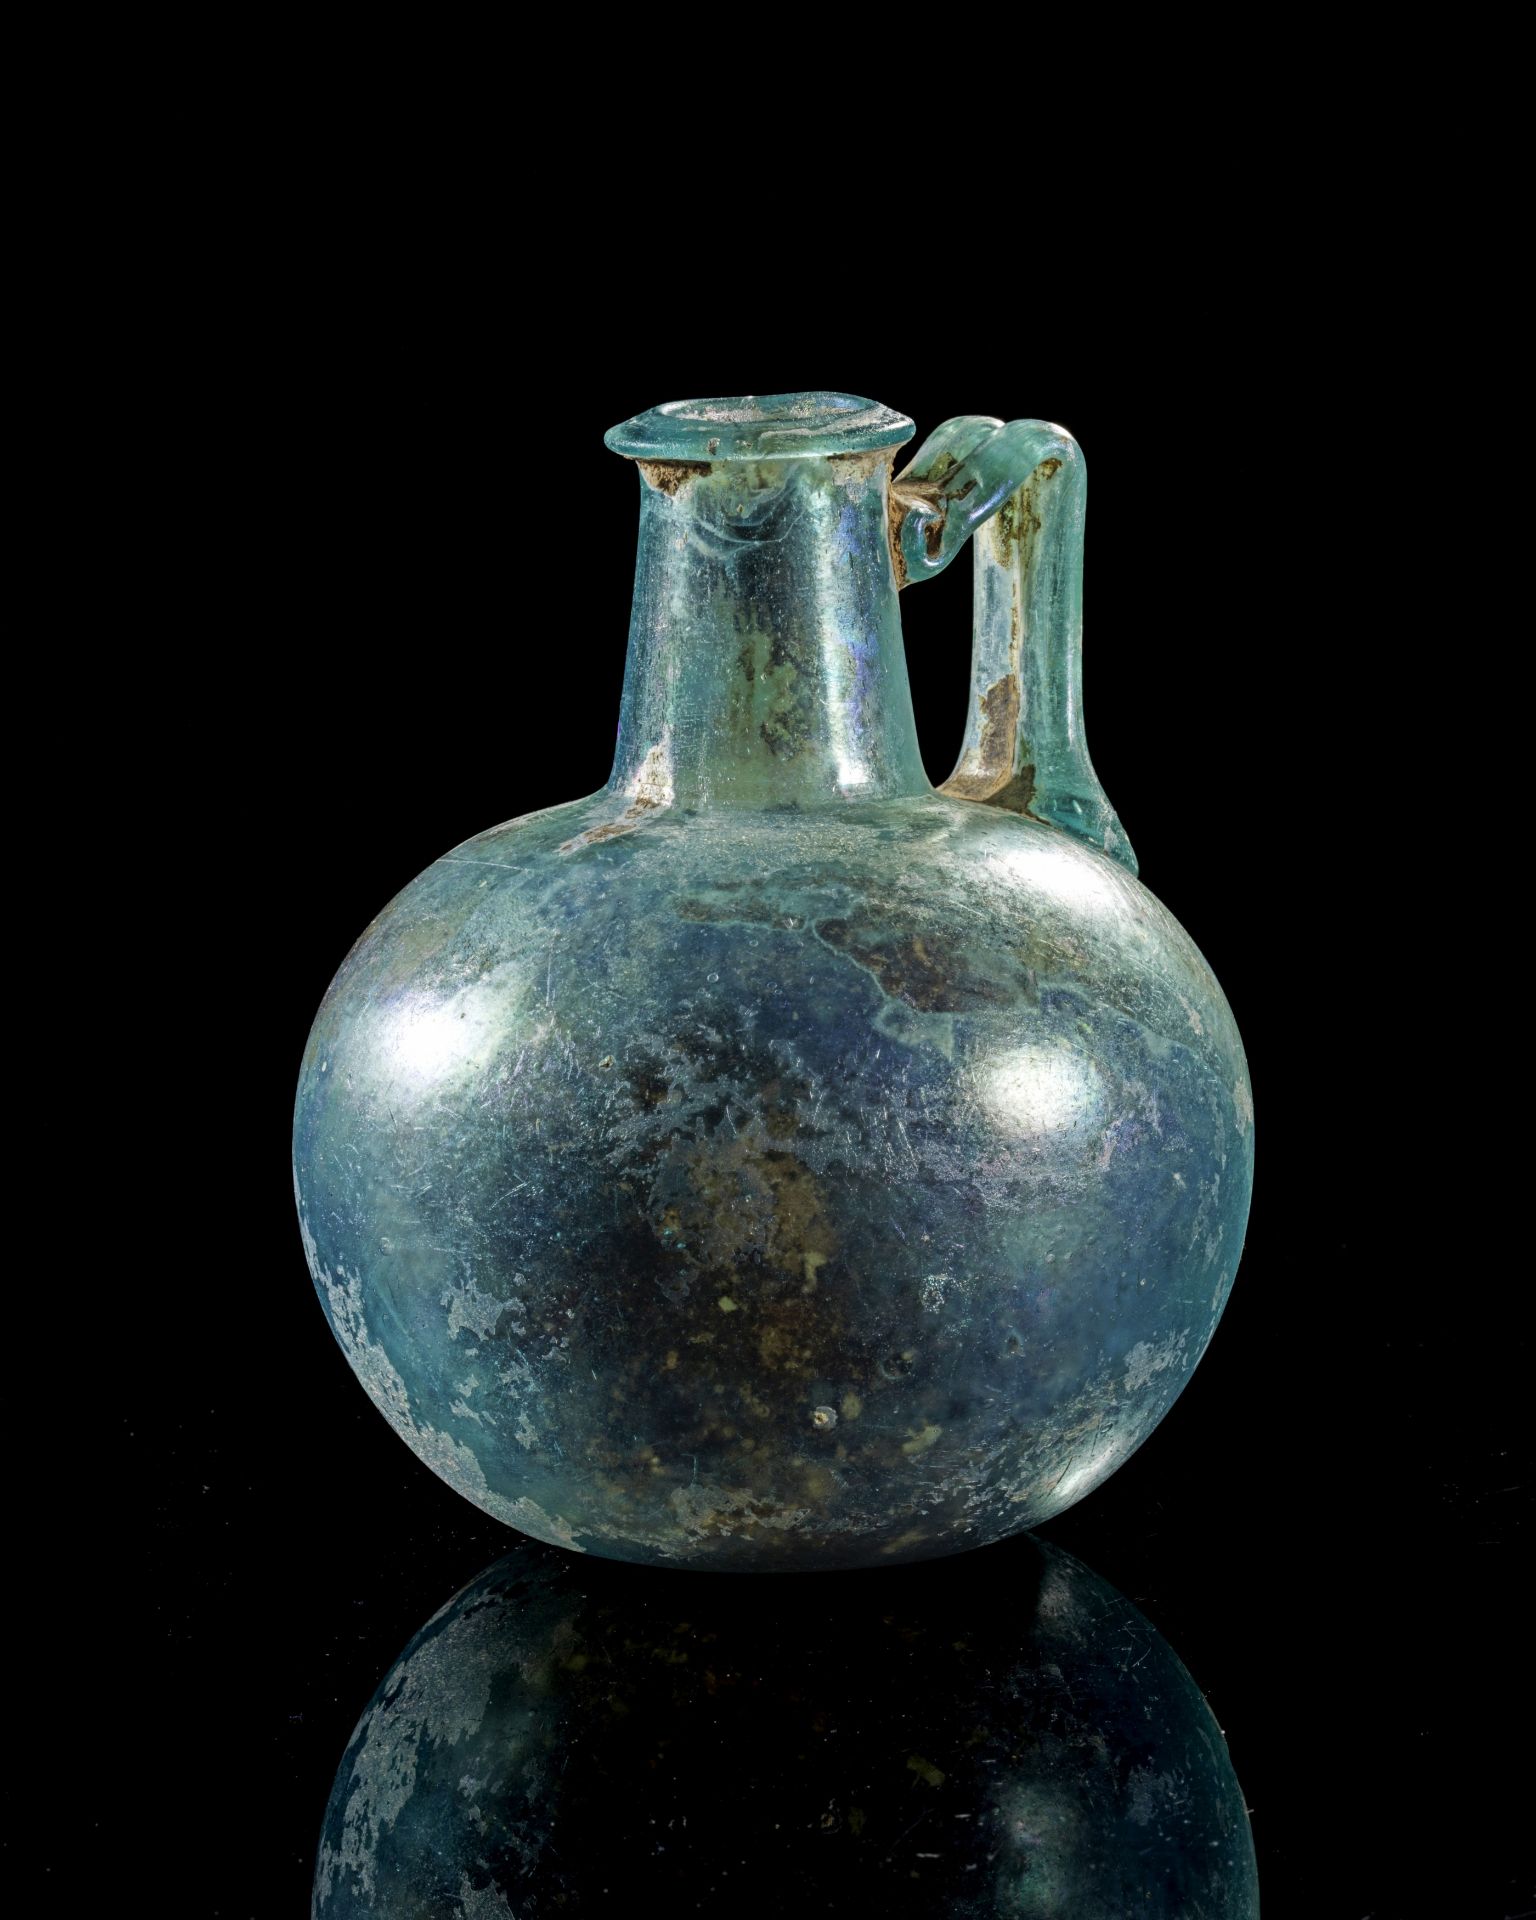 Heavy bulbous jug of light blue glass.